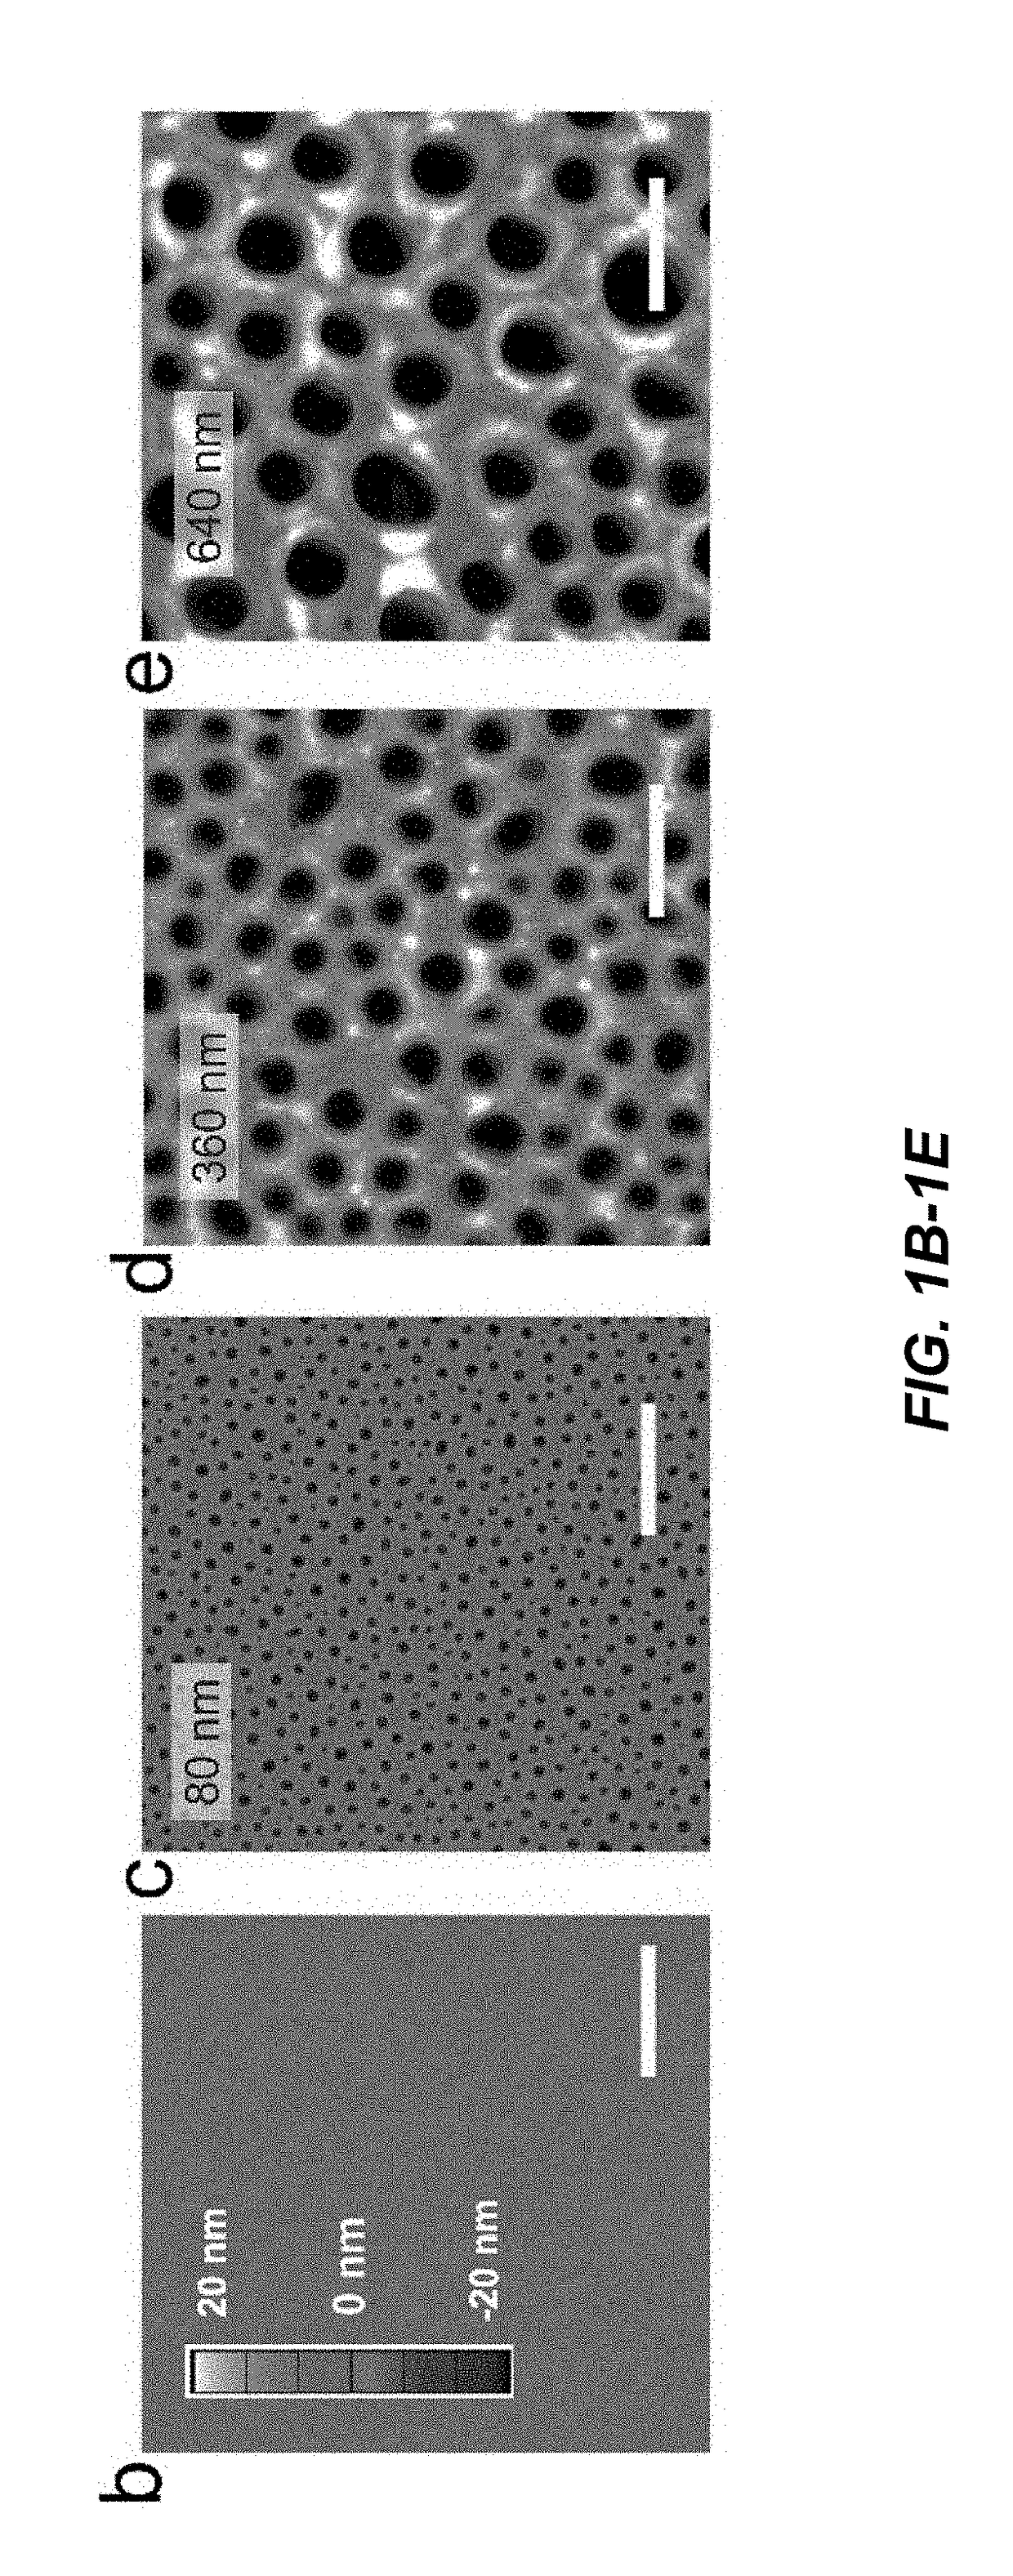 Nanoporous semiconductor thin films